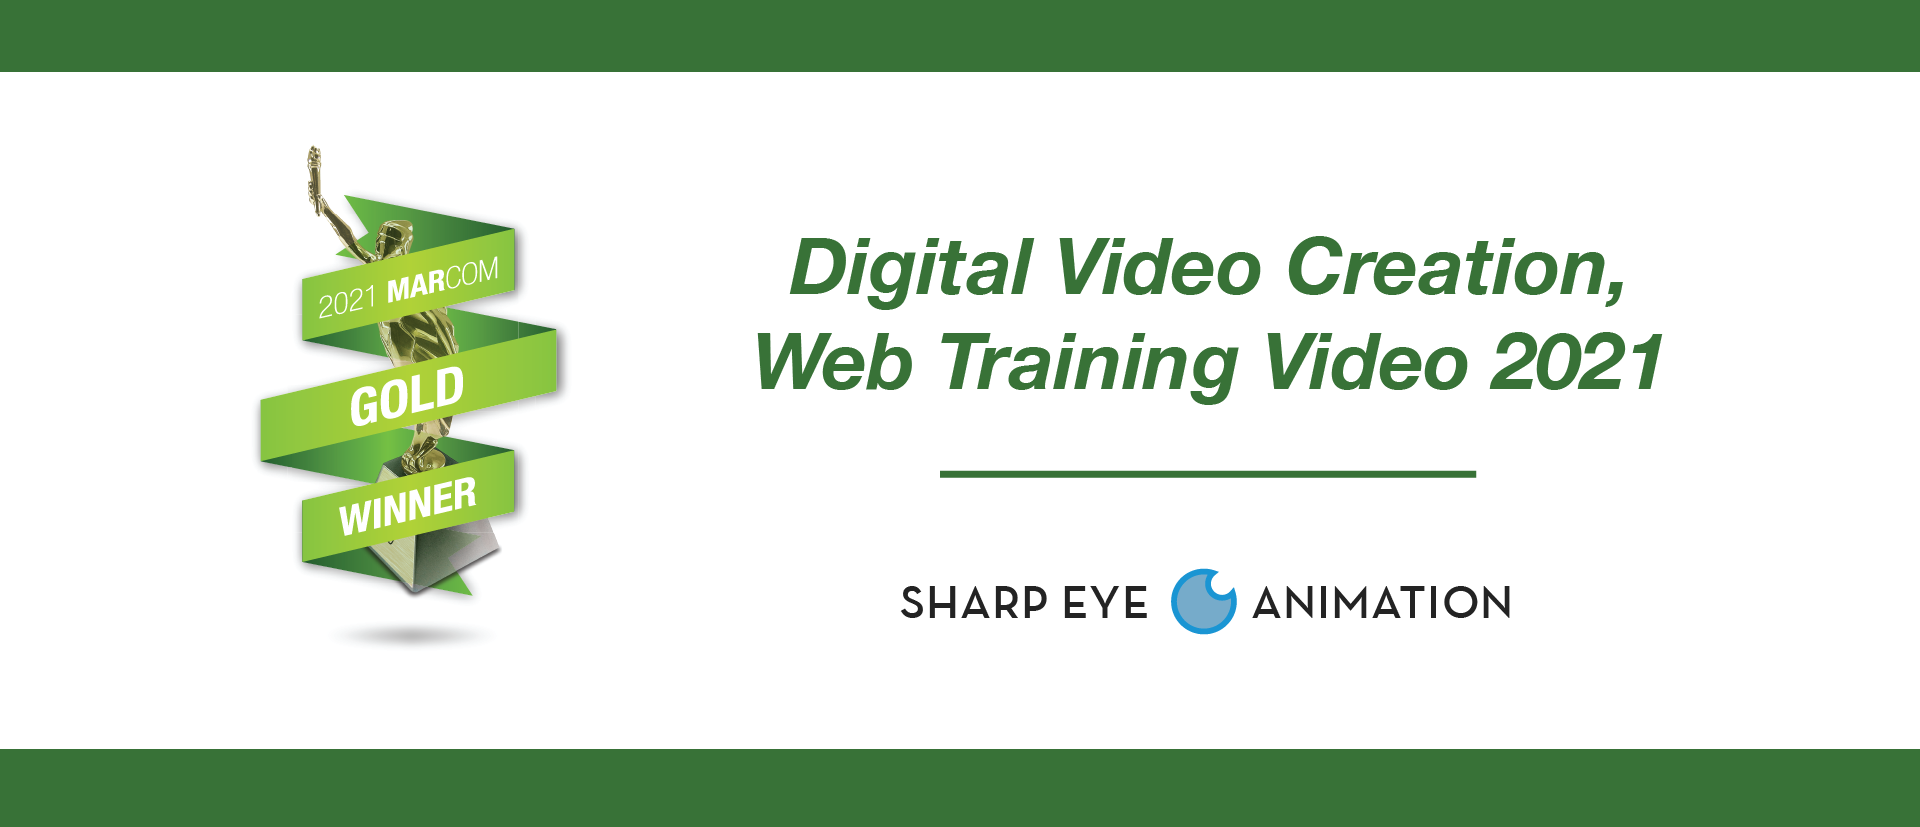 Sharp Eye Animation Wins Digital Video Award Four Consecutive Years - Sharp  Eye Animation